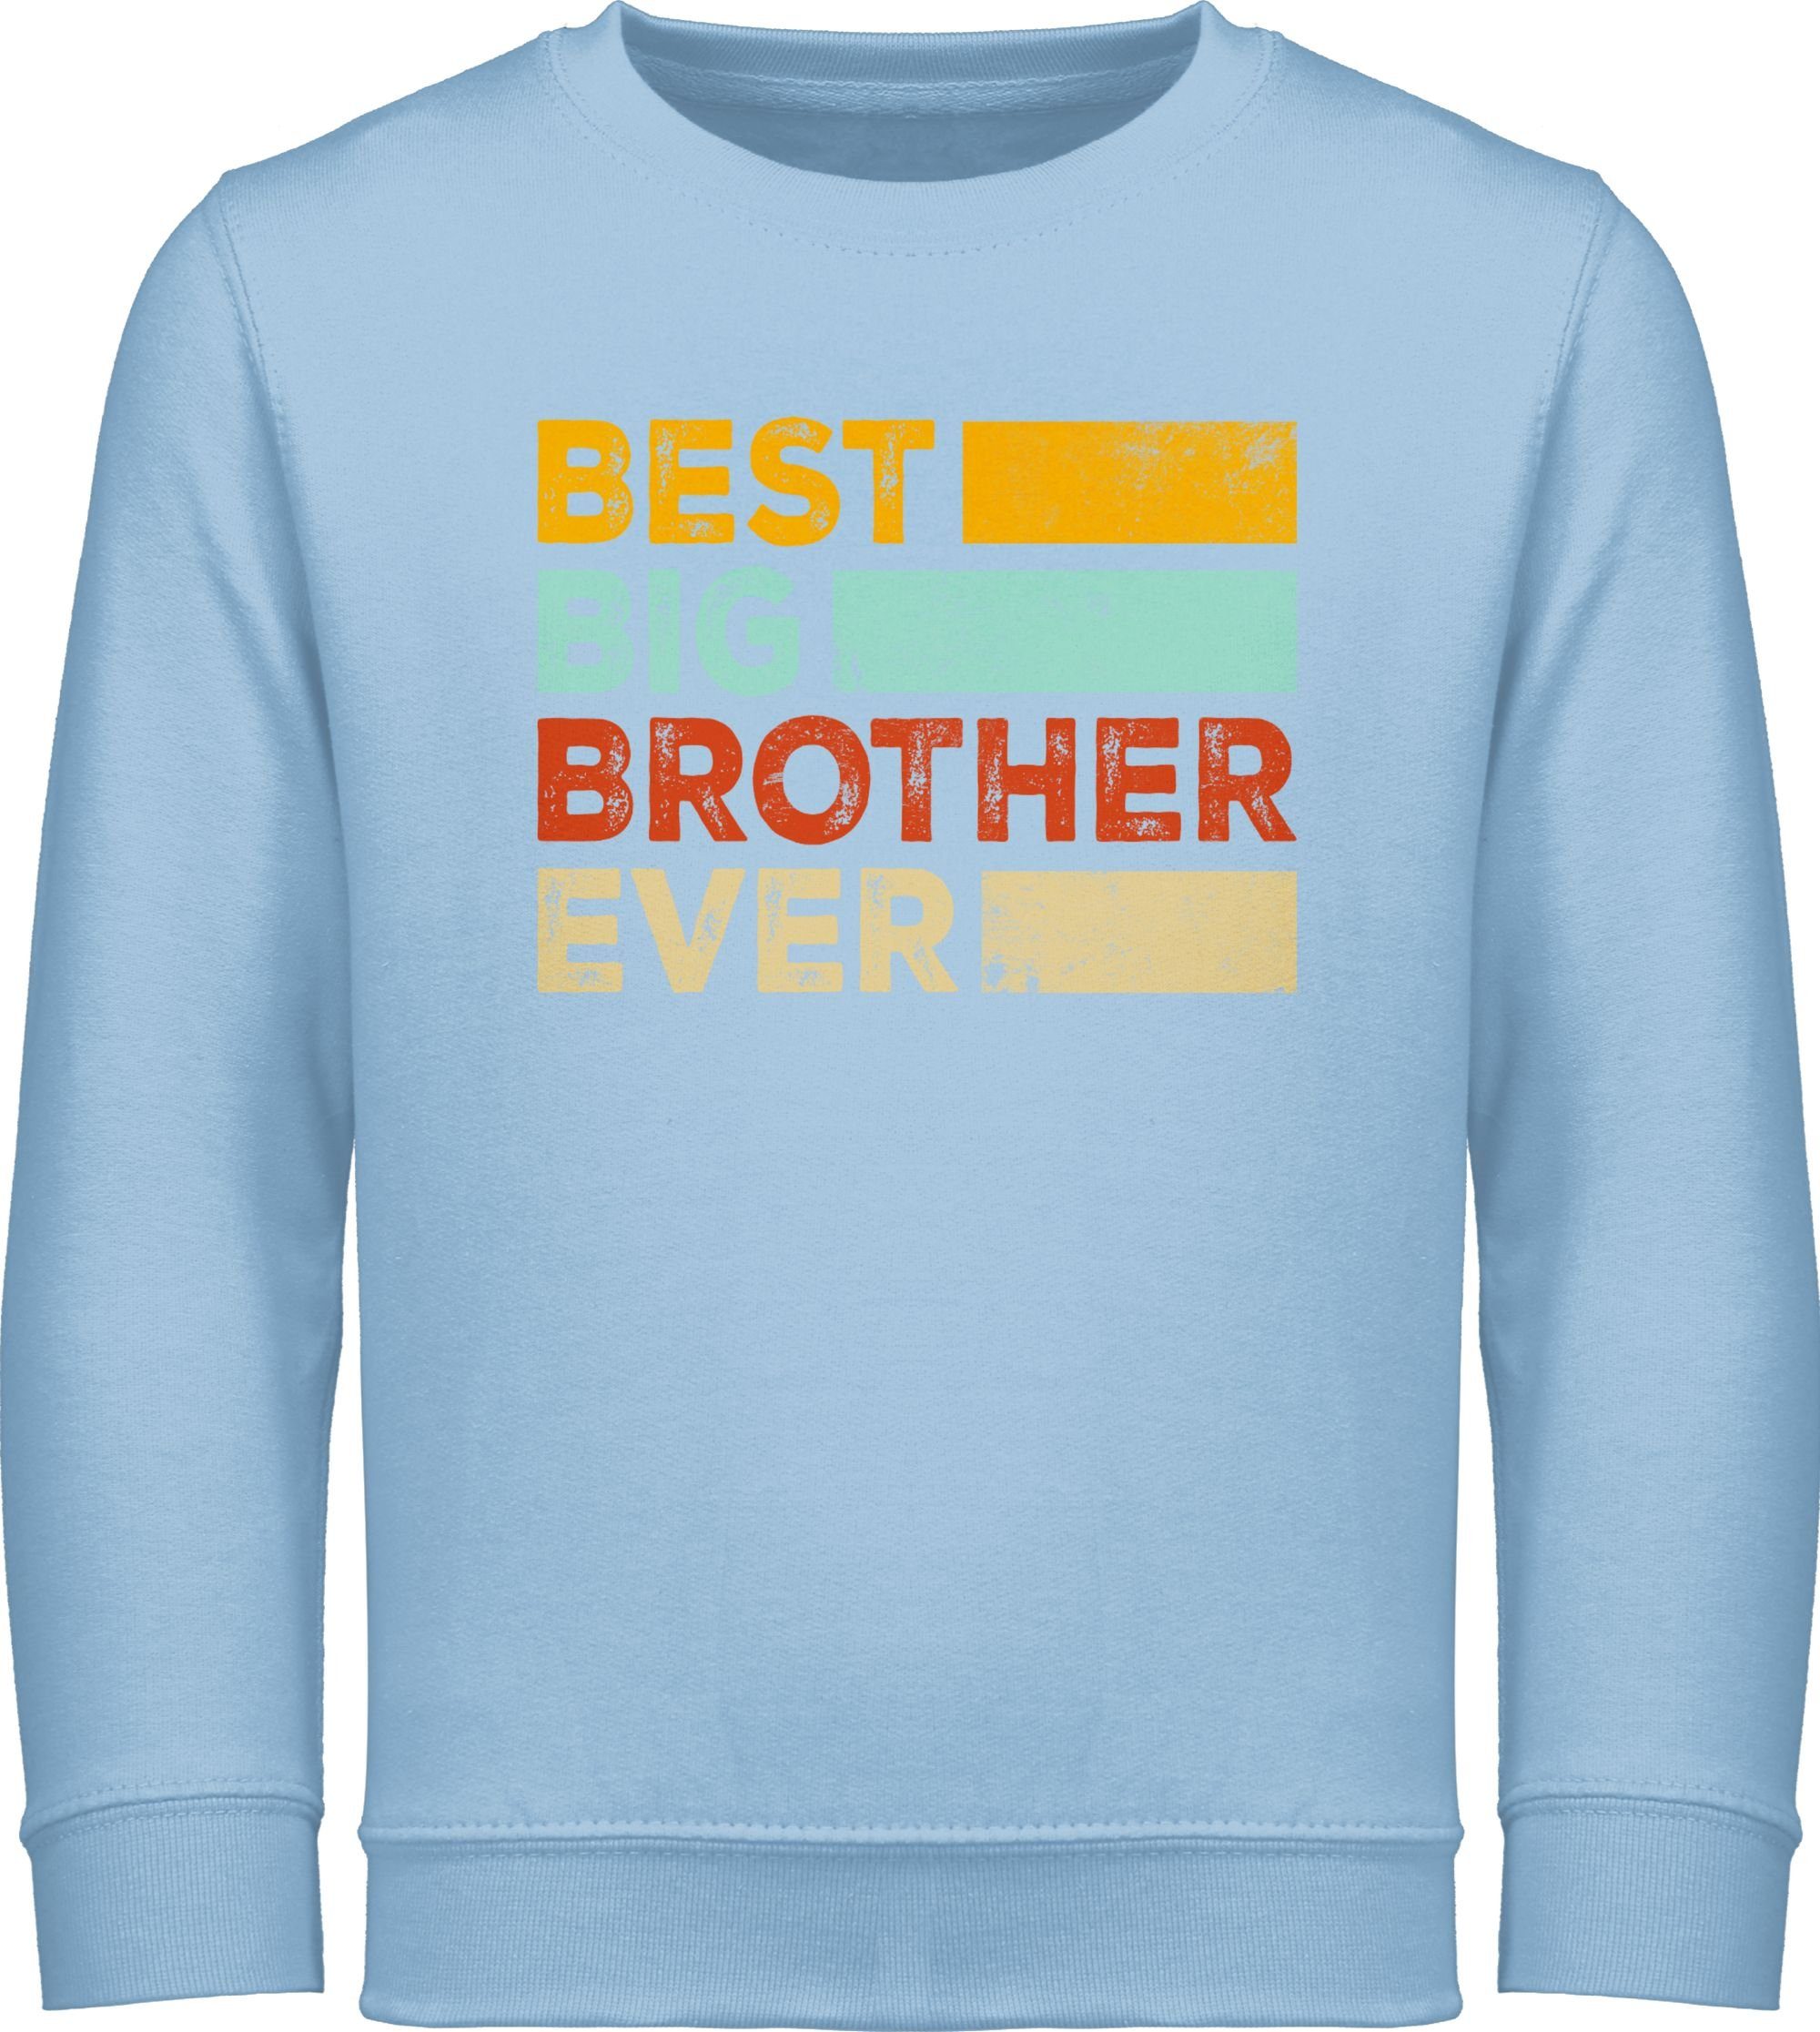 großer Sweatshirt Bruder Bruder Big Hellblau Zeiten Großer Shirtracer aller Bester Best Brother Geschenk 3 Ever